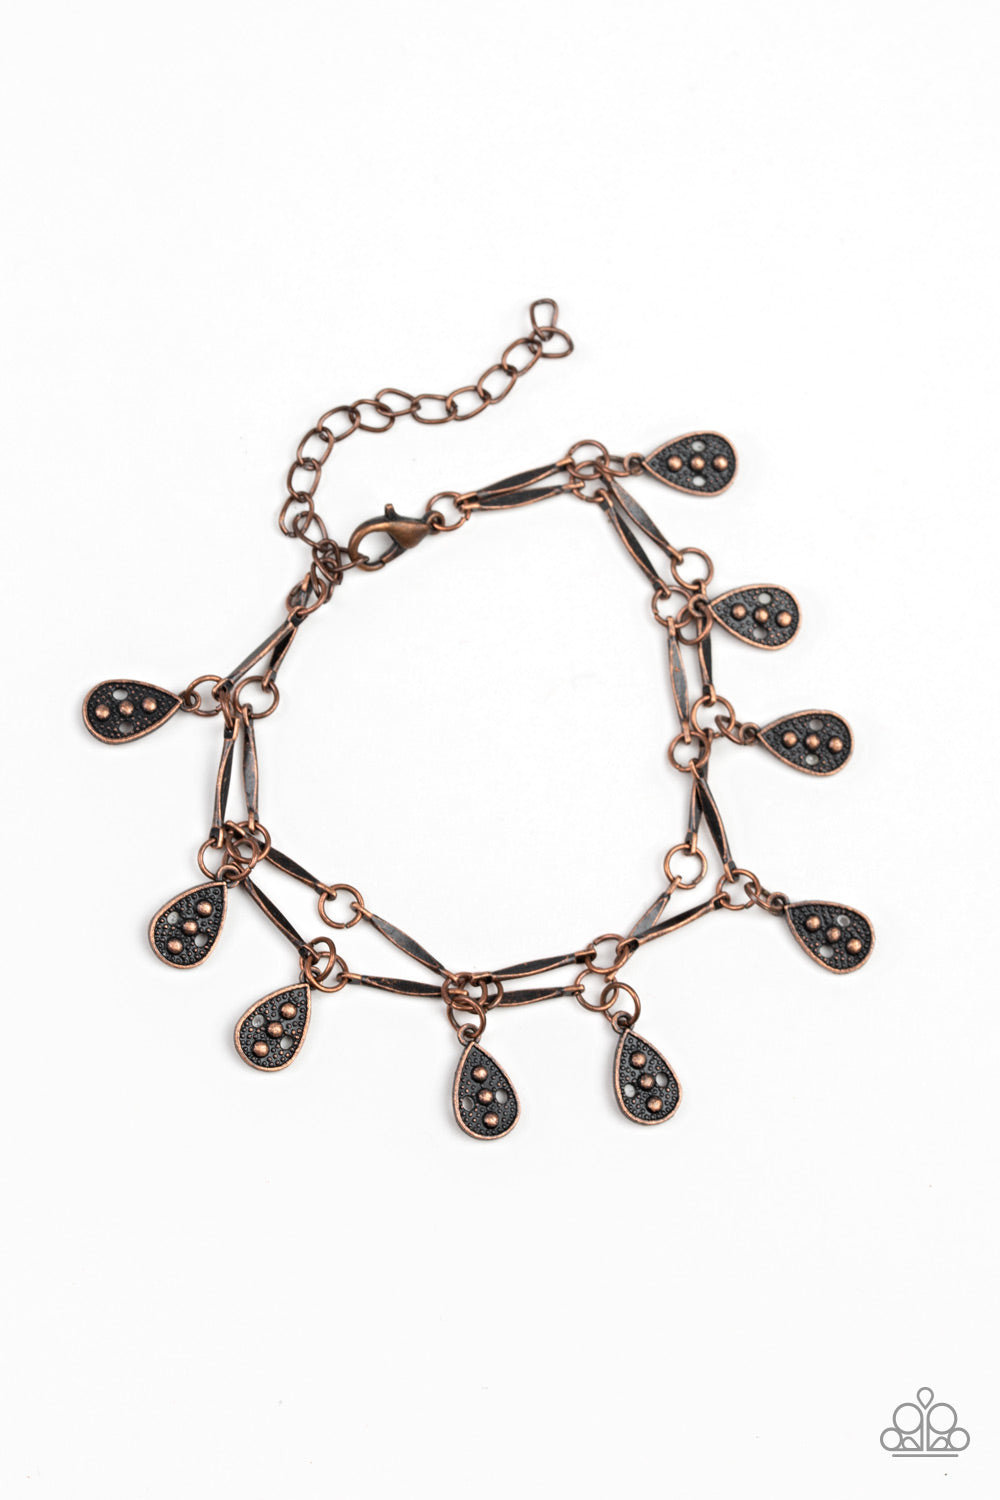 oak-sisters-jewelry-gypsy-glee-copper-bracelet-paparazzi-accessories-by-lisa